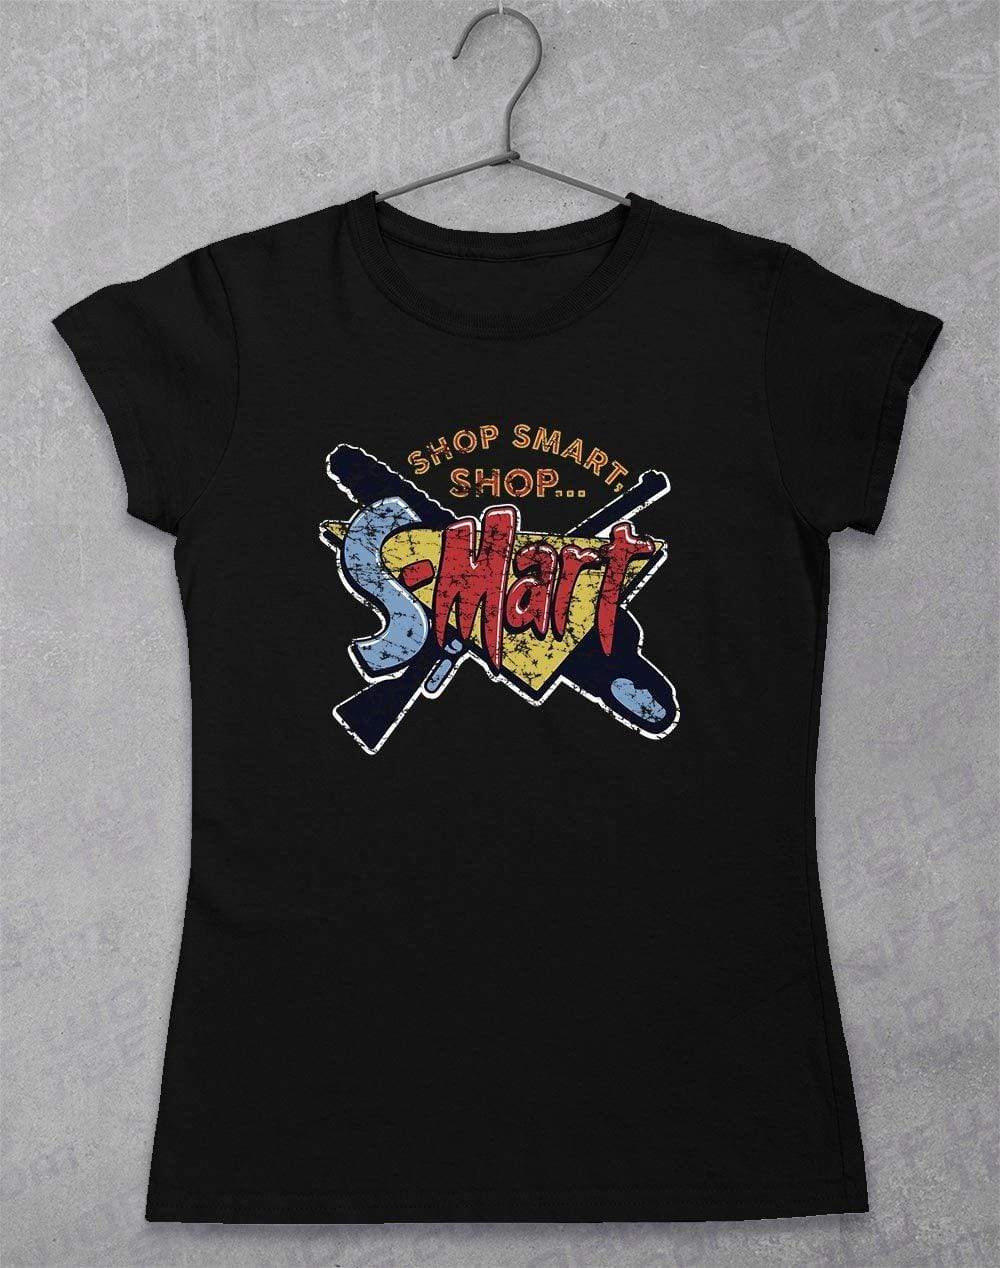 S-Mart Chainsaw and Gun Women's T-Shirt 8-10 / Black  - Off World Tees